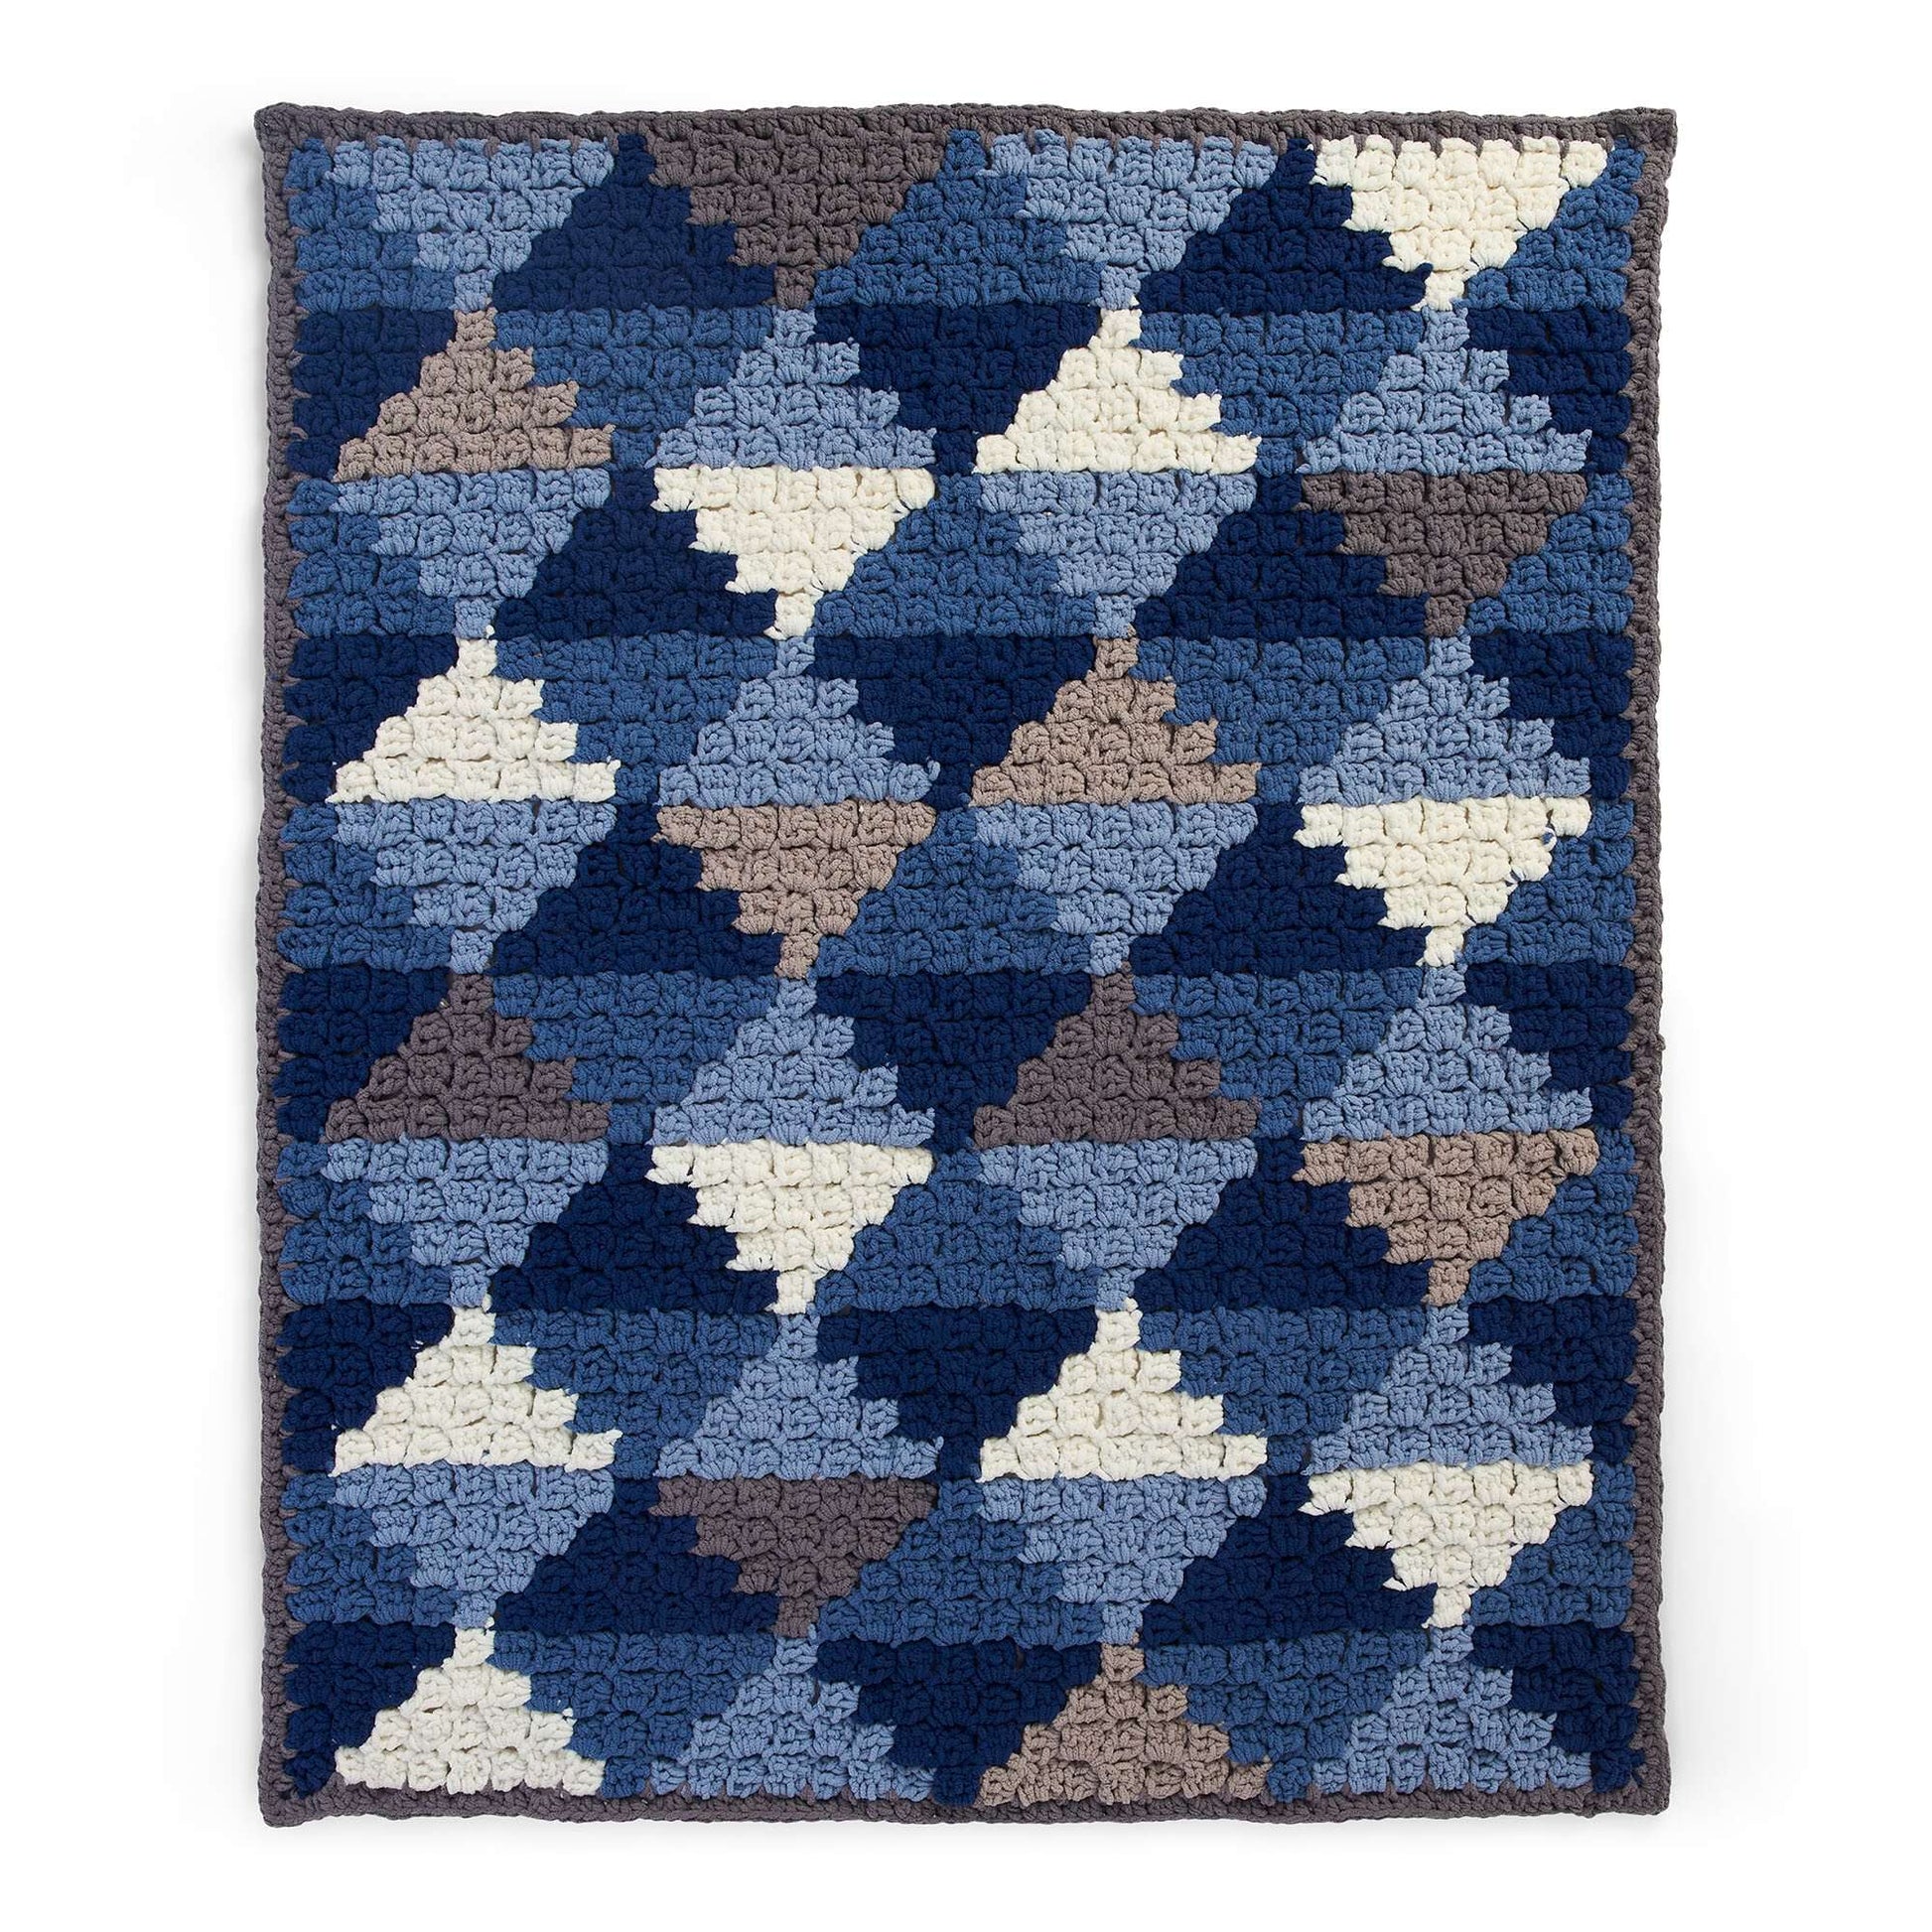 Free Bernat Shaded Diamonds Crochet Blanket Pattern